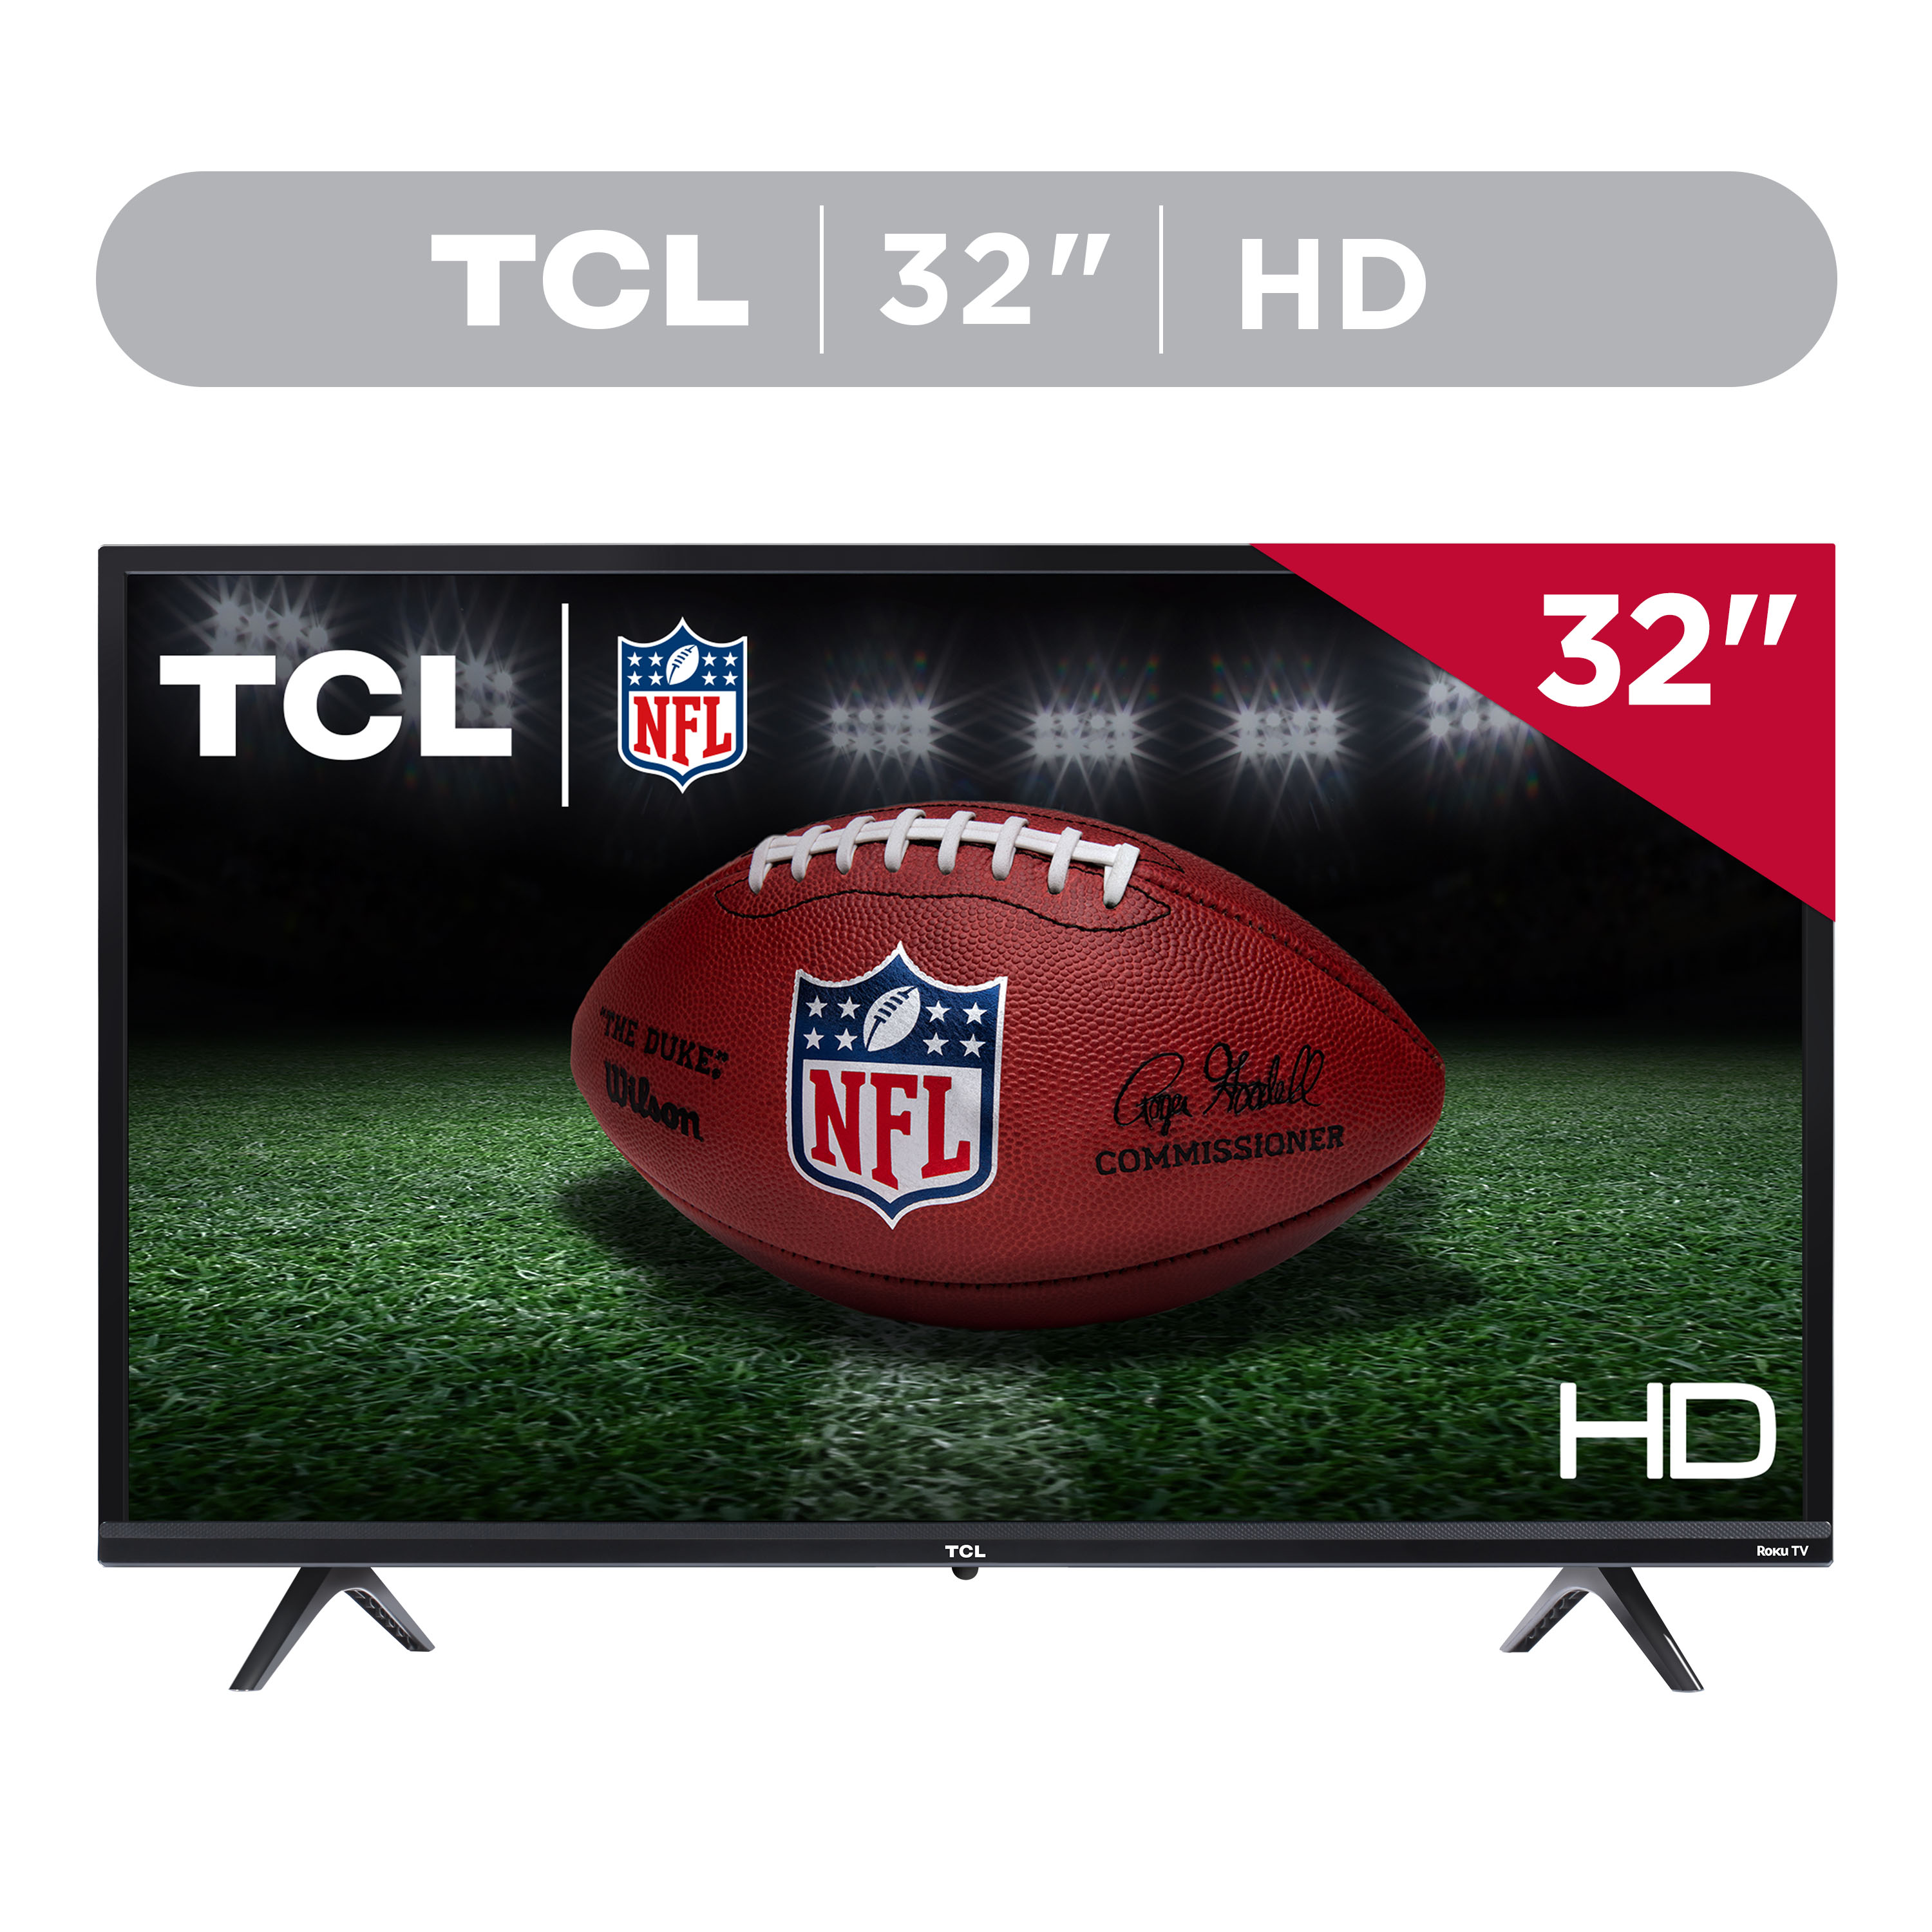 TCL 32" Class 720P HD LED Roku Smart TV 3 Series 32S331 - image 1 of 17